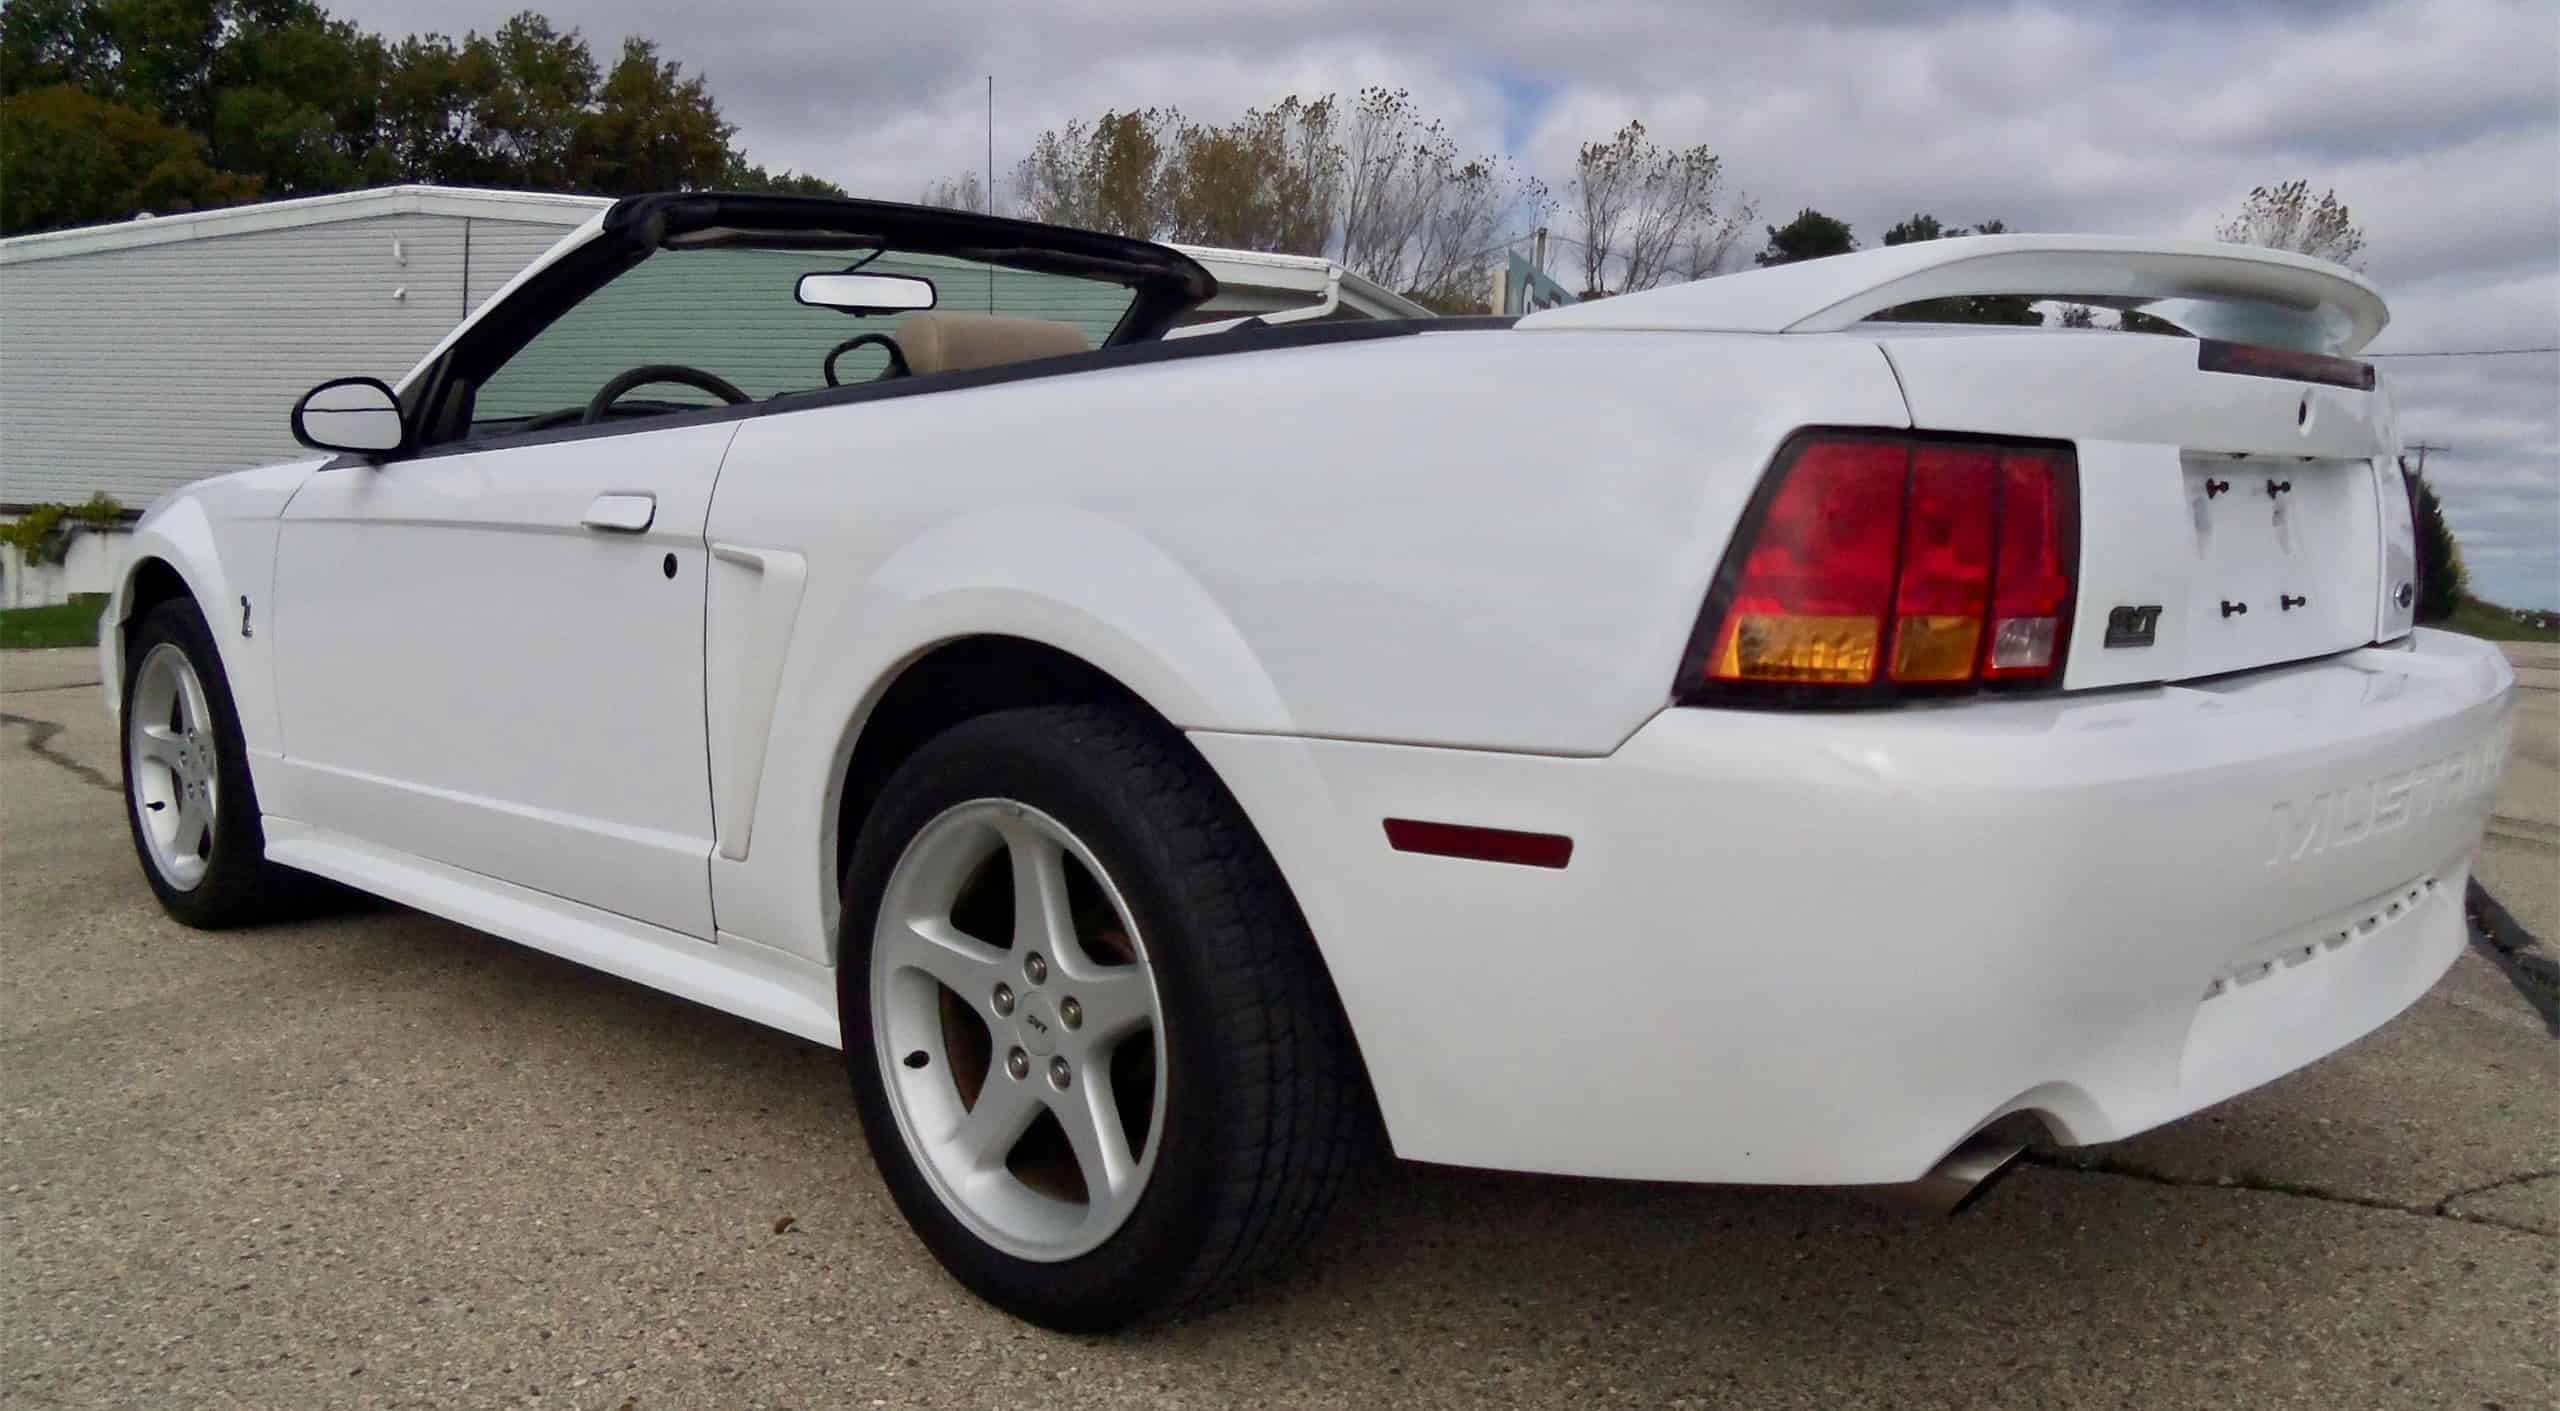 SVT, Ford gave 1999 Mustang ‘New Edge’ design, but SVT gave performance edge, ClassicCars.com Journal